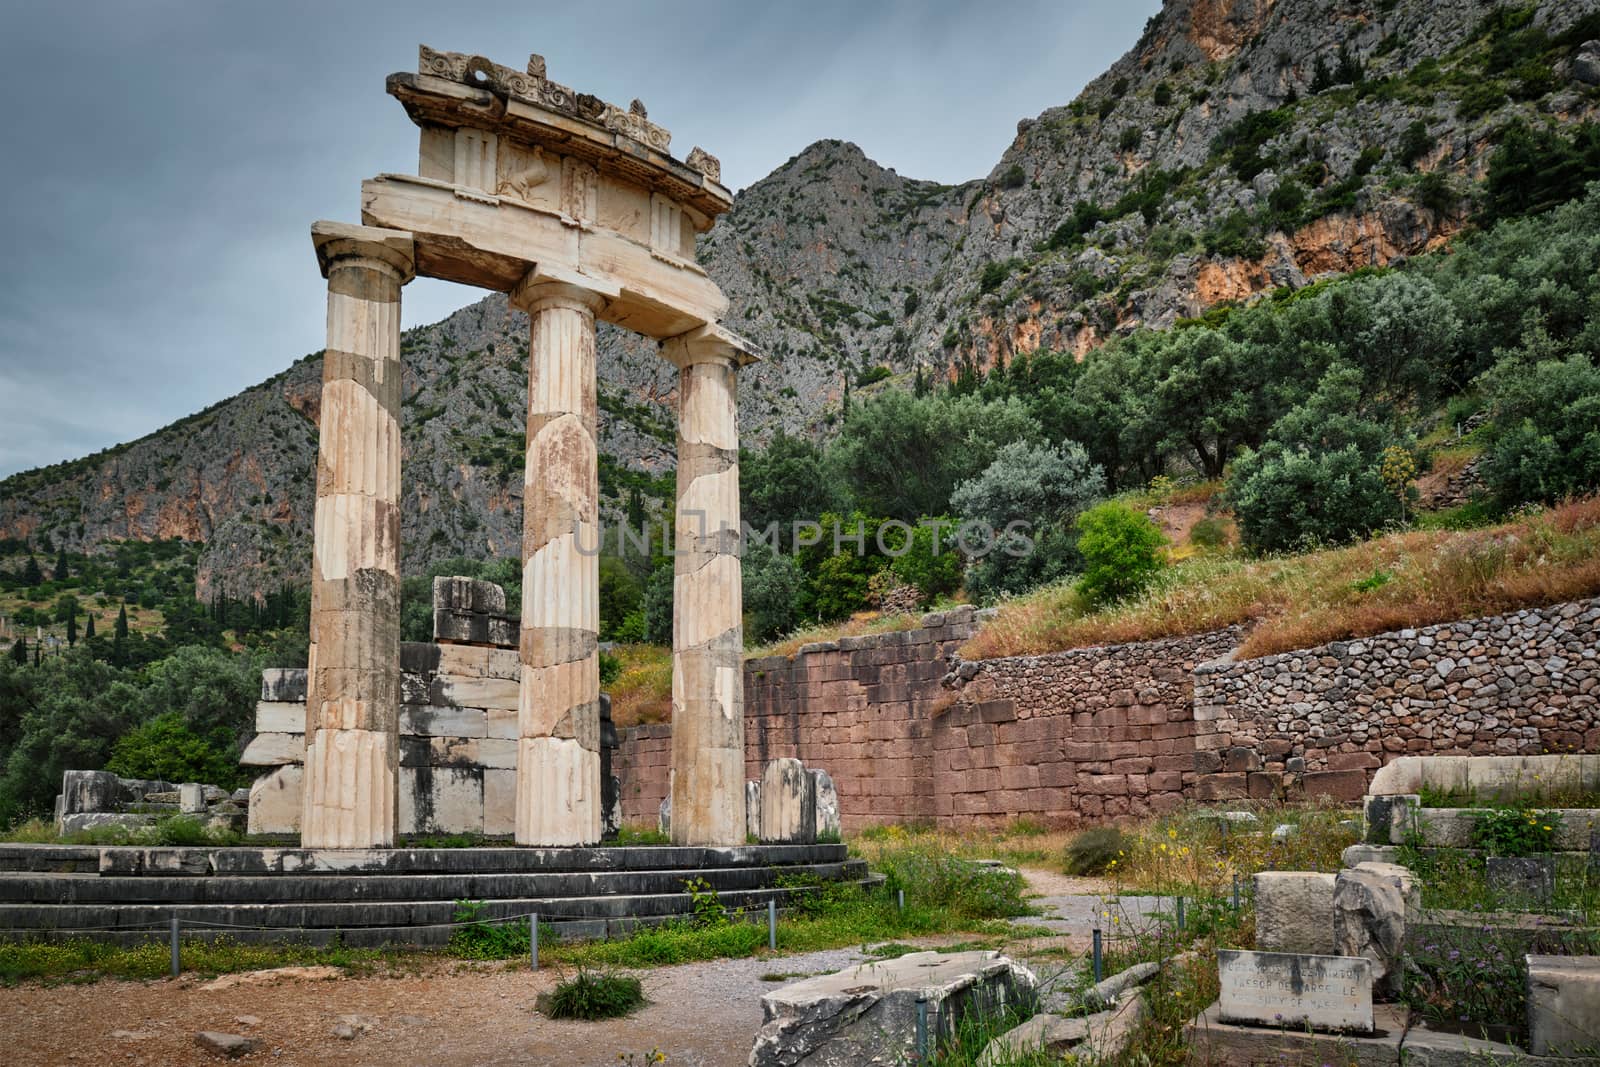 Athena Pronoia temple ruins in ancient Delphi, Greece by dimol